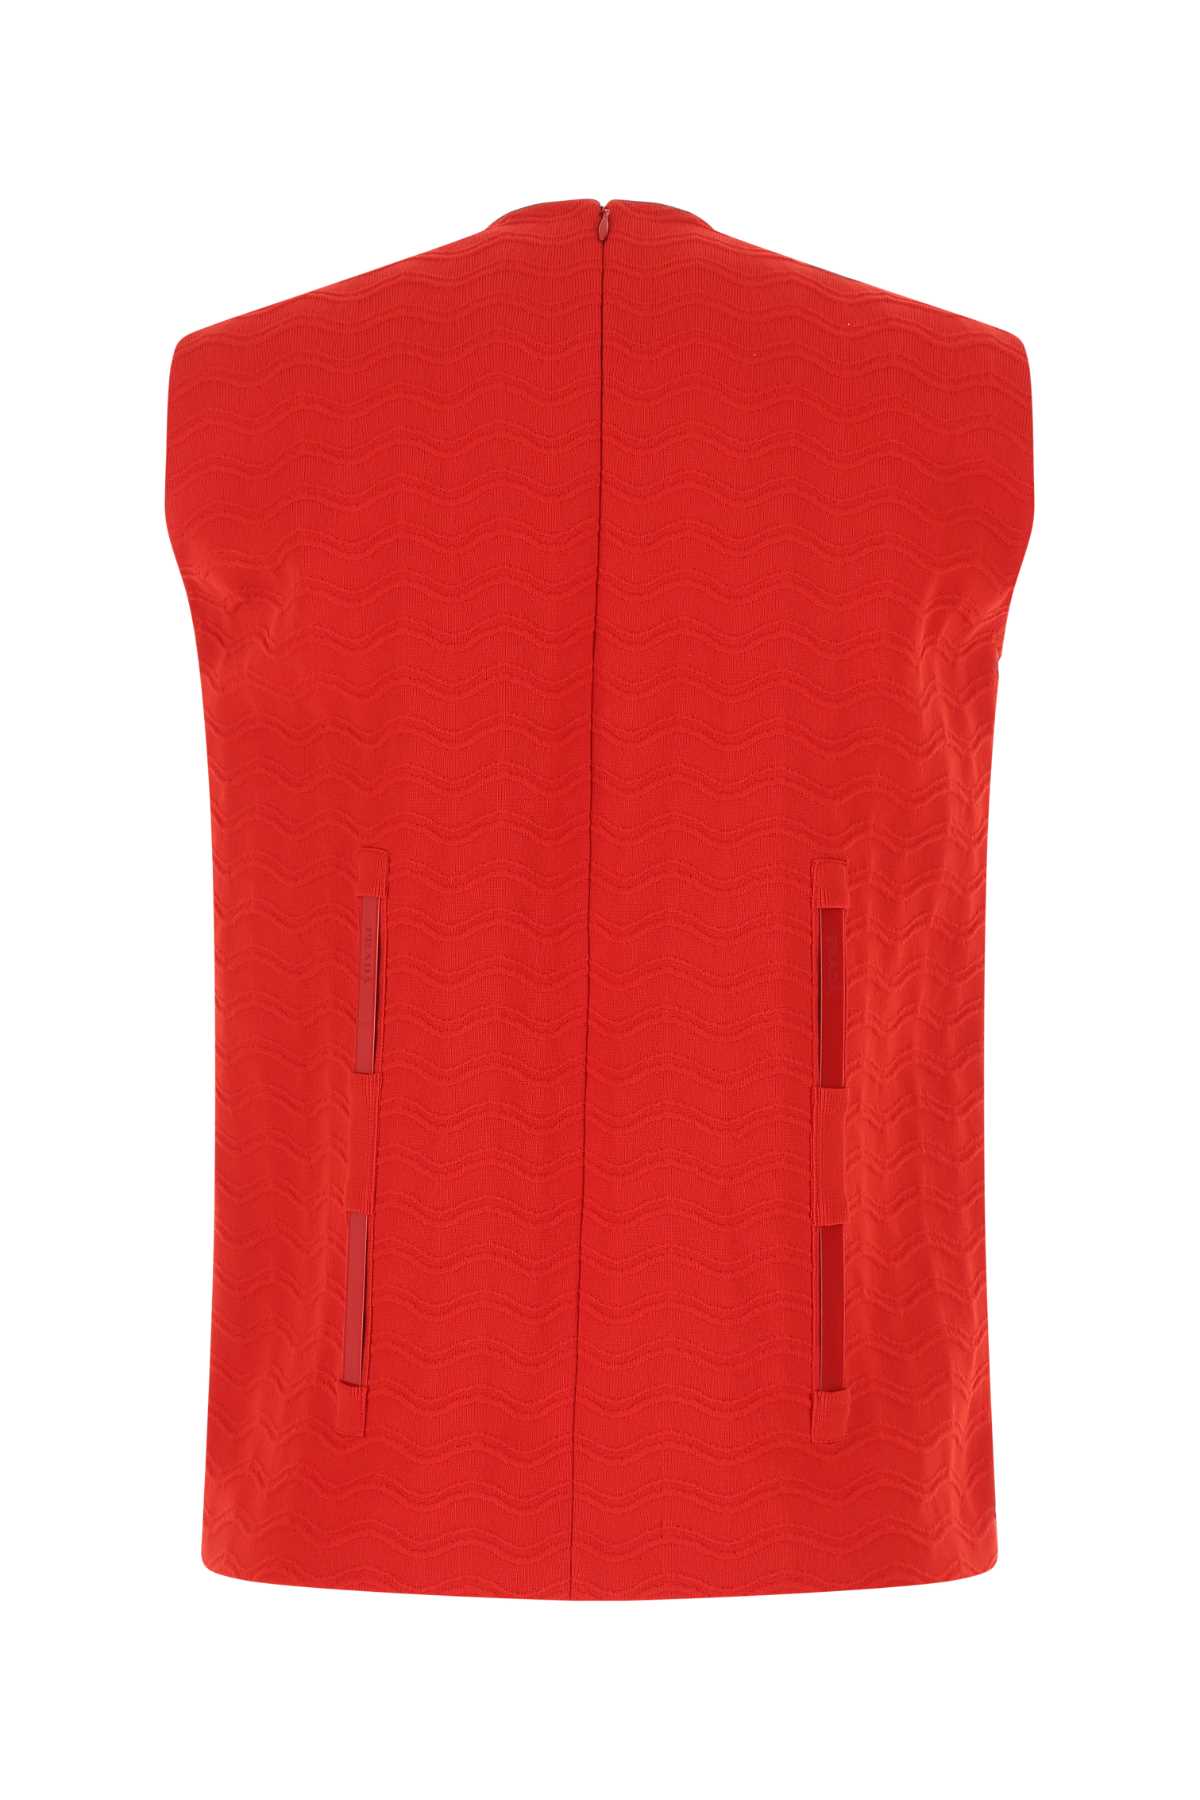 Shop Prada Red Jersey Top In F0011